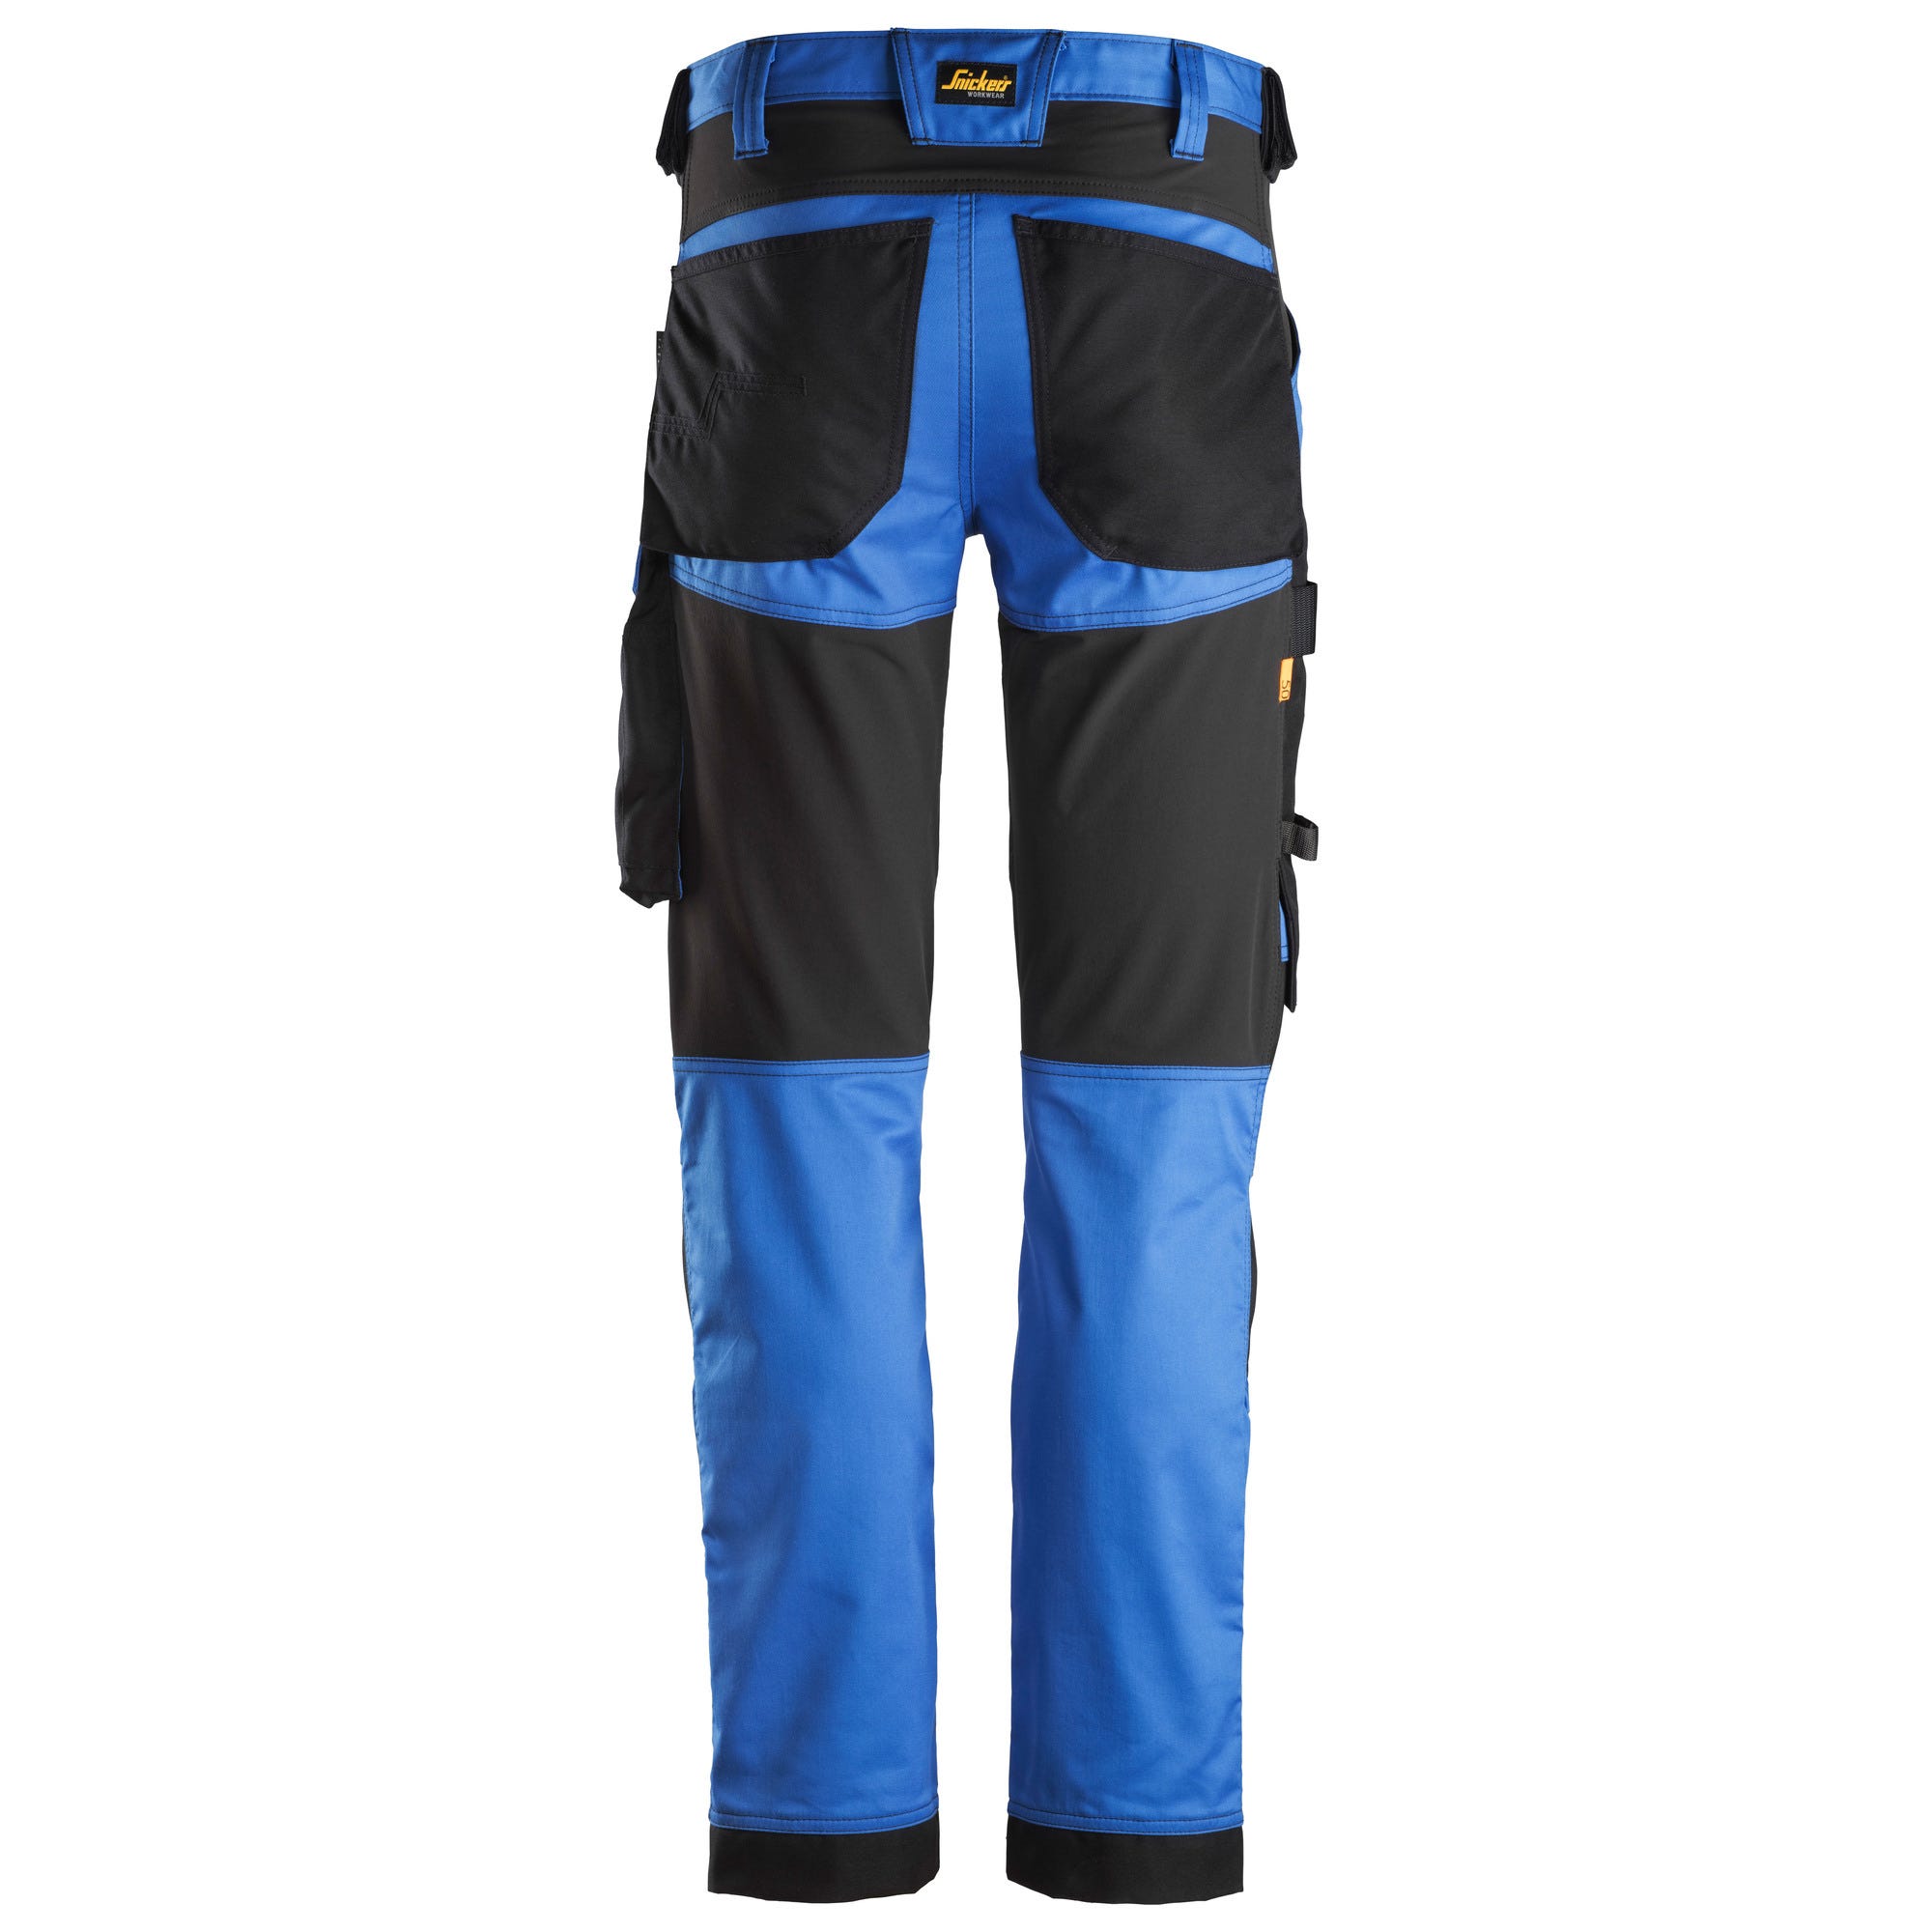 Pantalon de travail slim fit bleu T.48 - SNICKERS 3